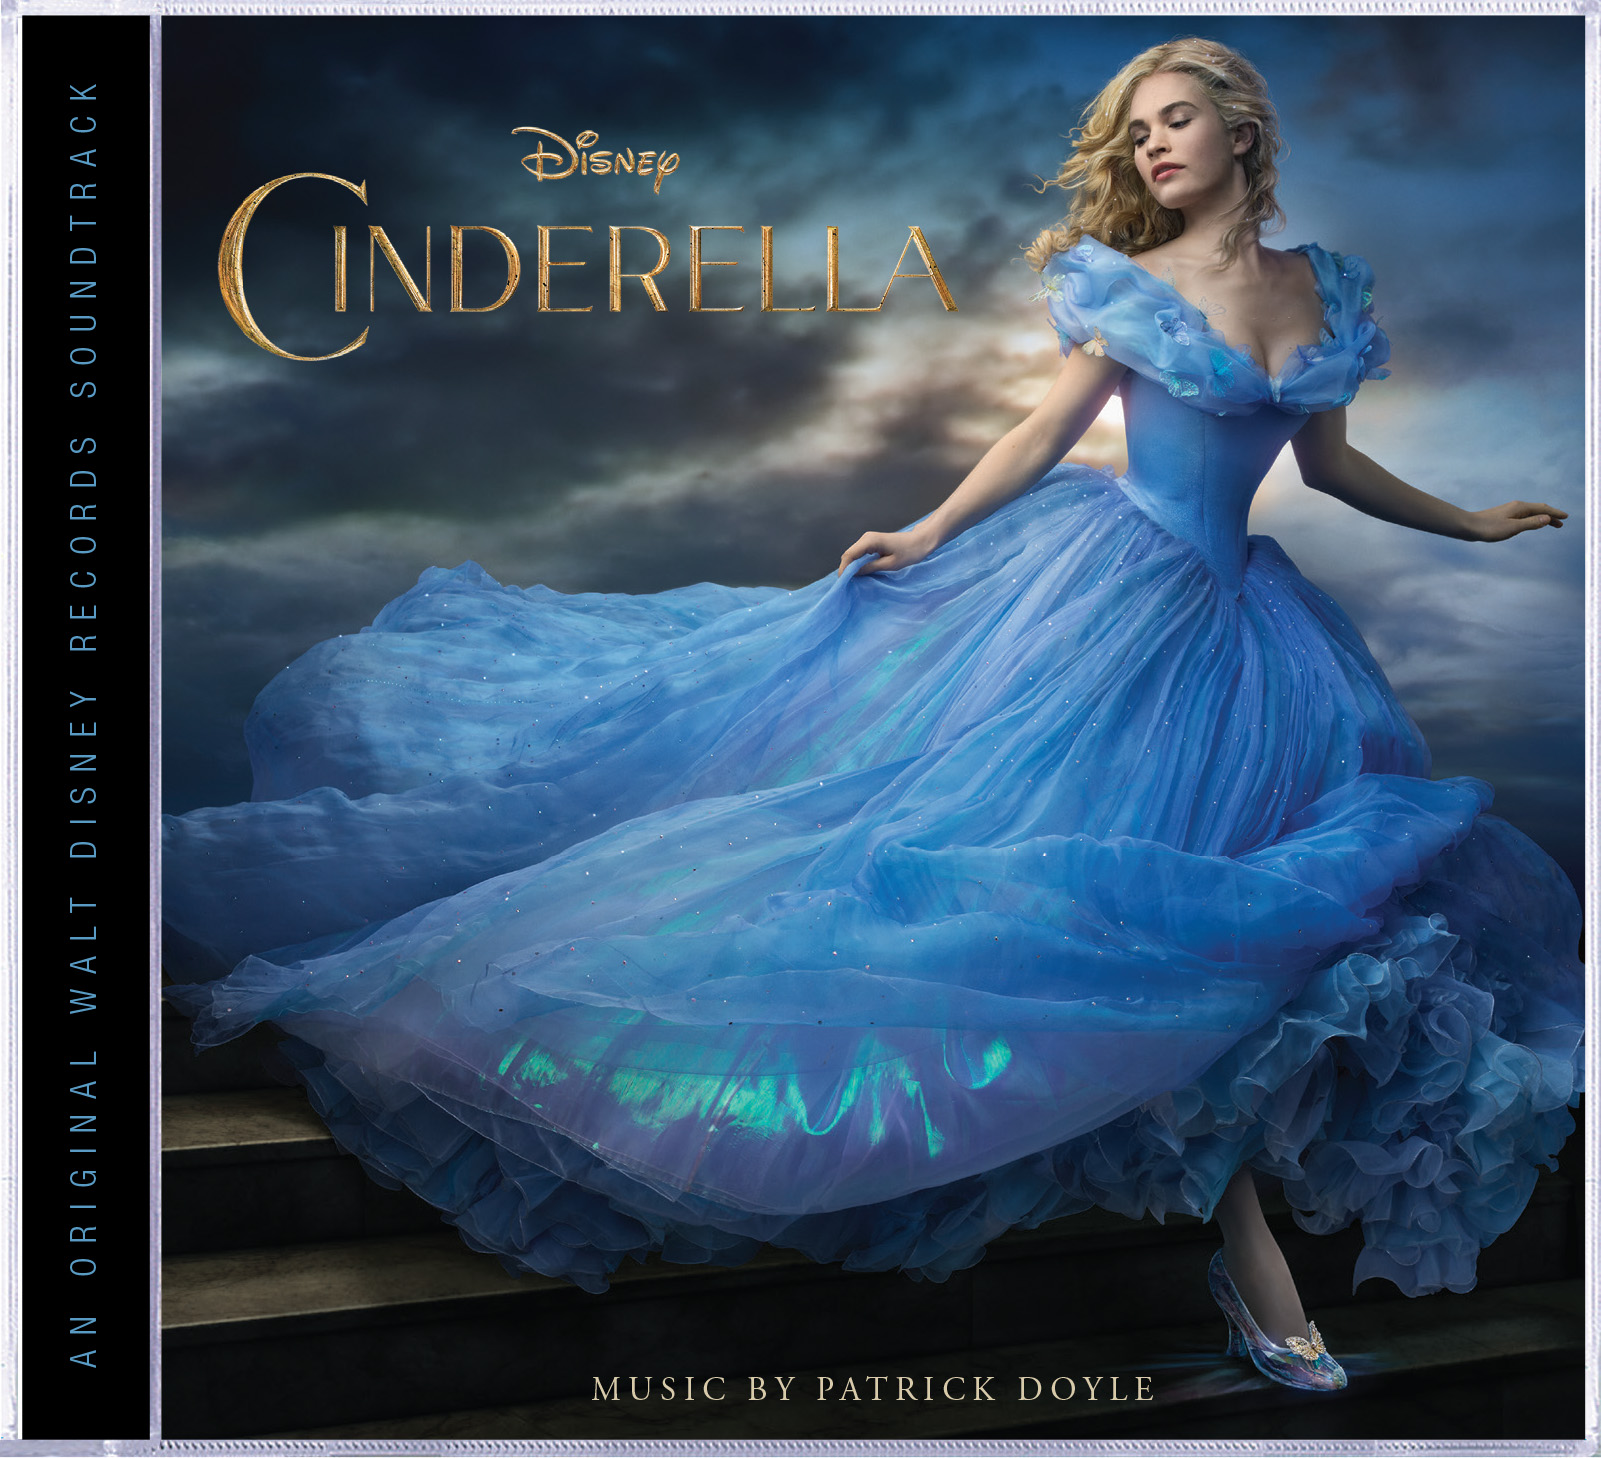 Cinderella 2015 CD cover art